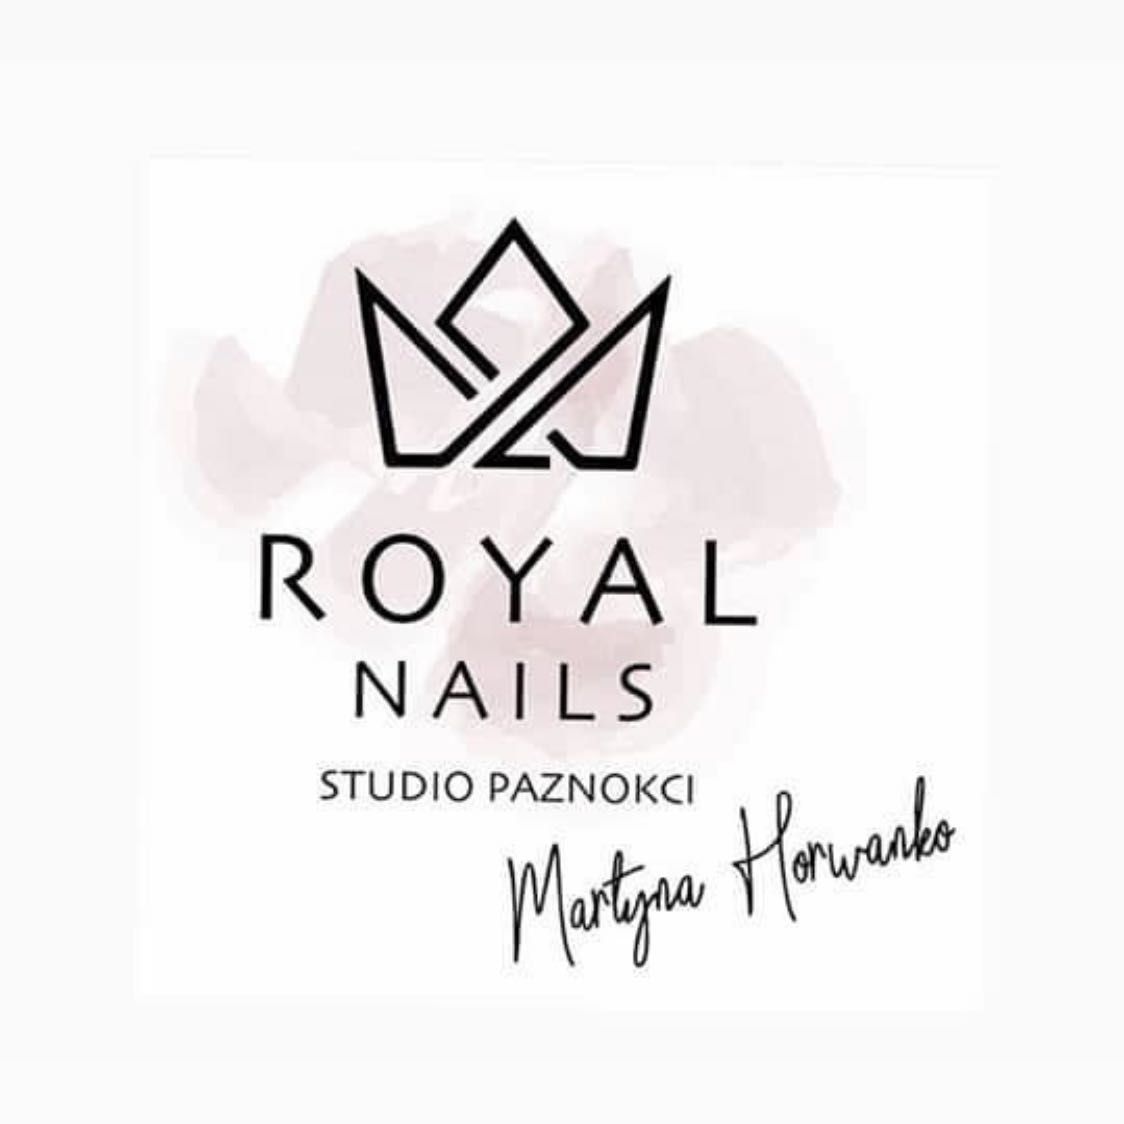 Royal Nails Studio Paznokci, 1 Maja 15, 40-224, Katowice